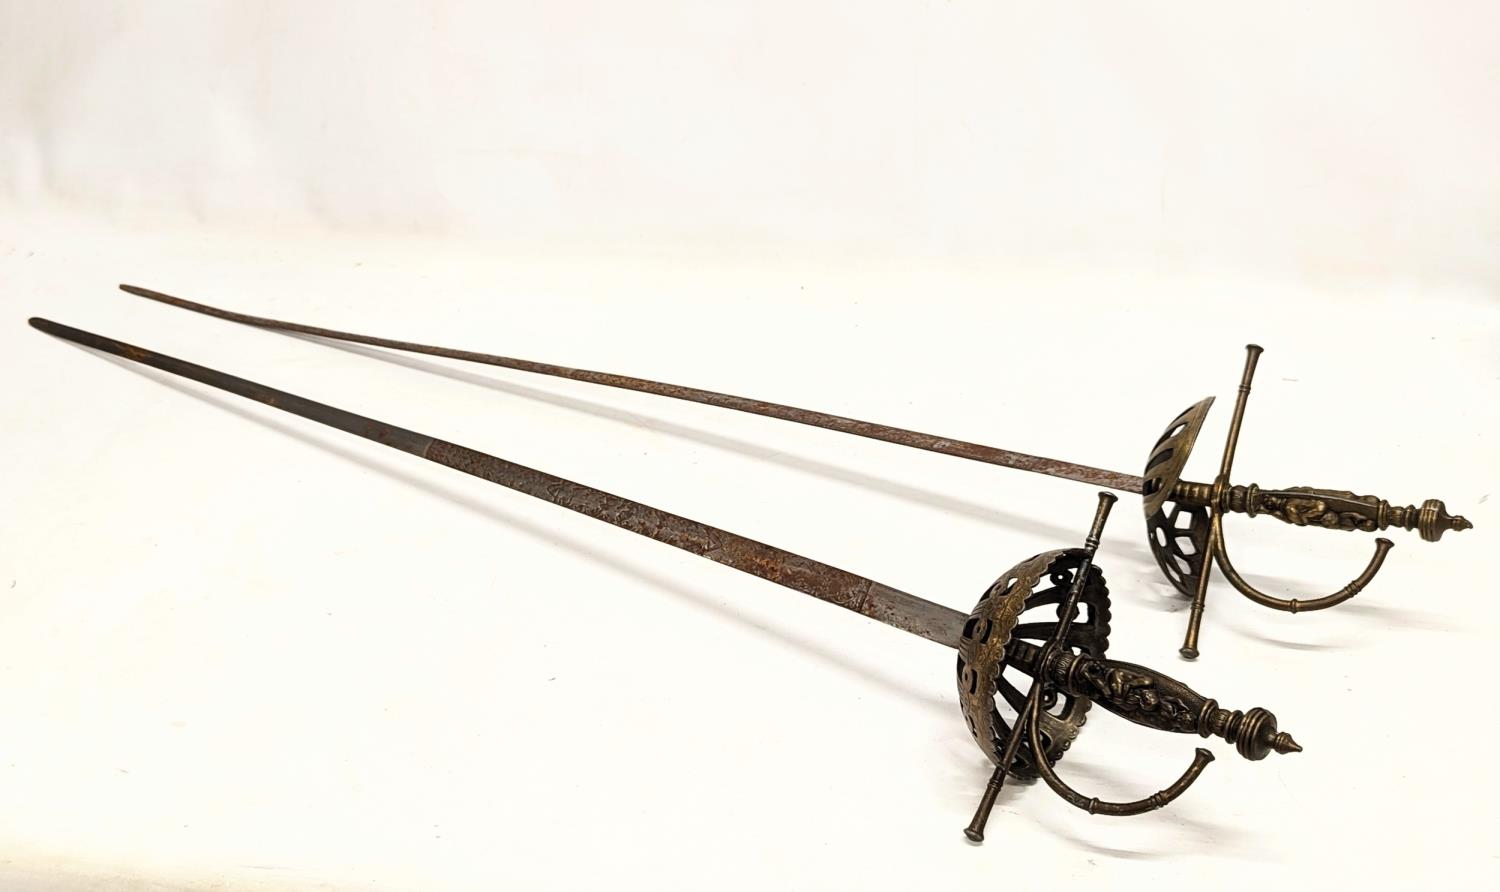 2 ornamental swords